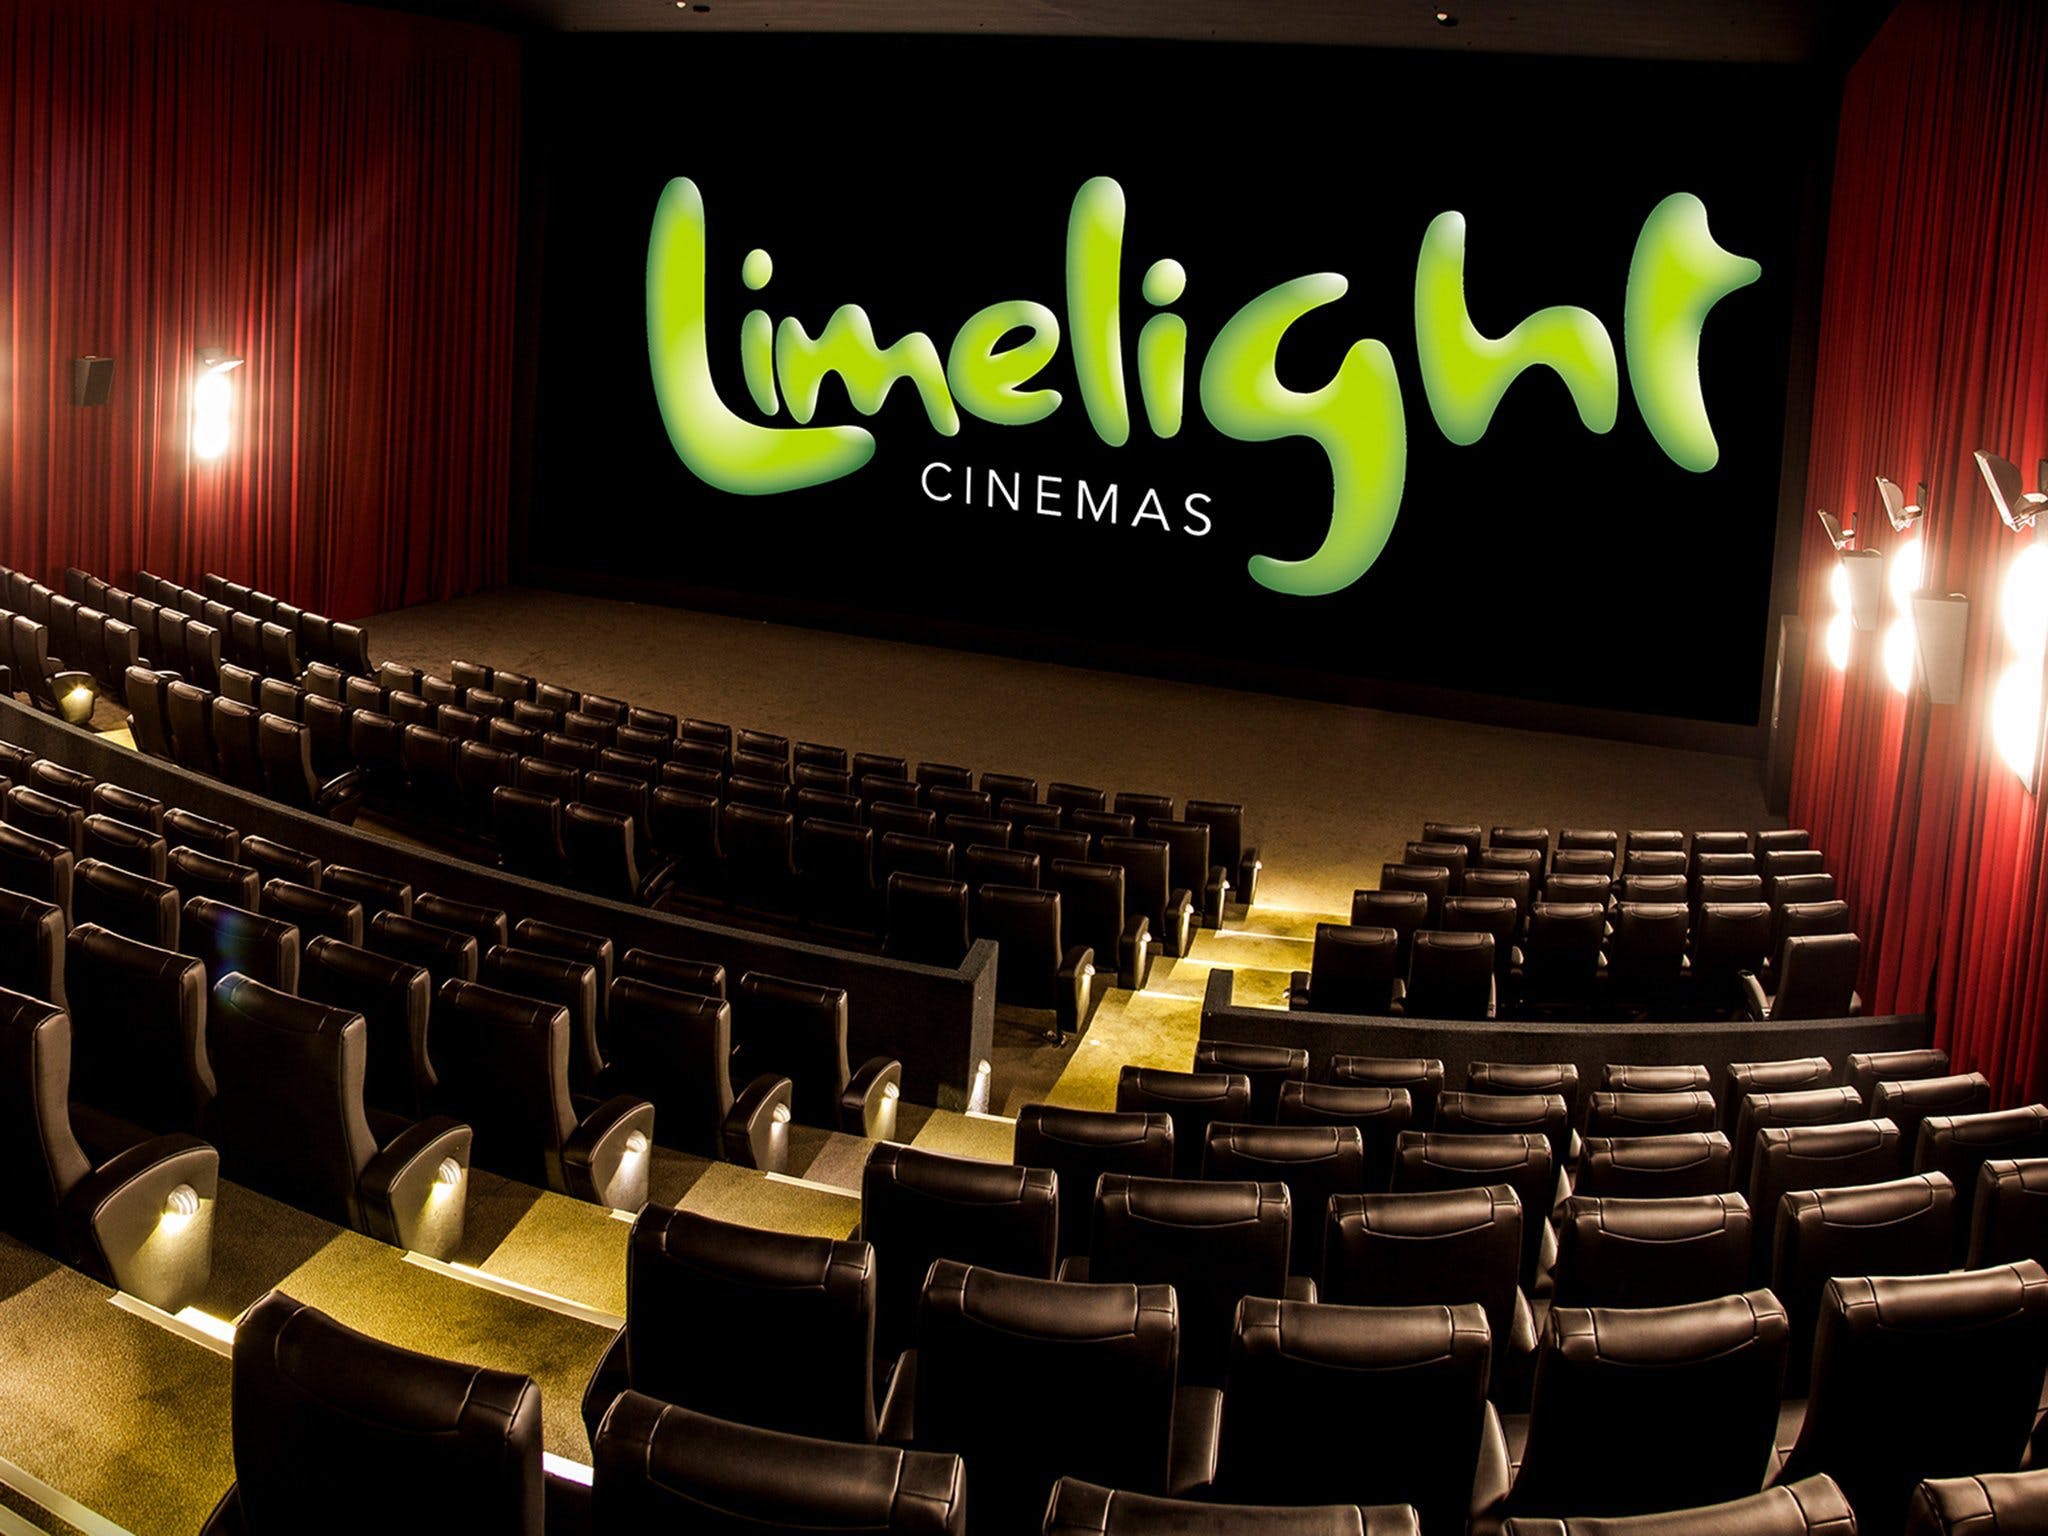 Limelight Cinema Ipswich